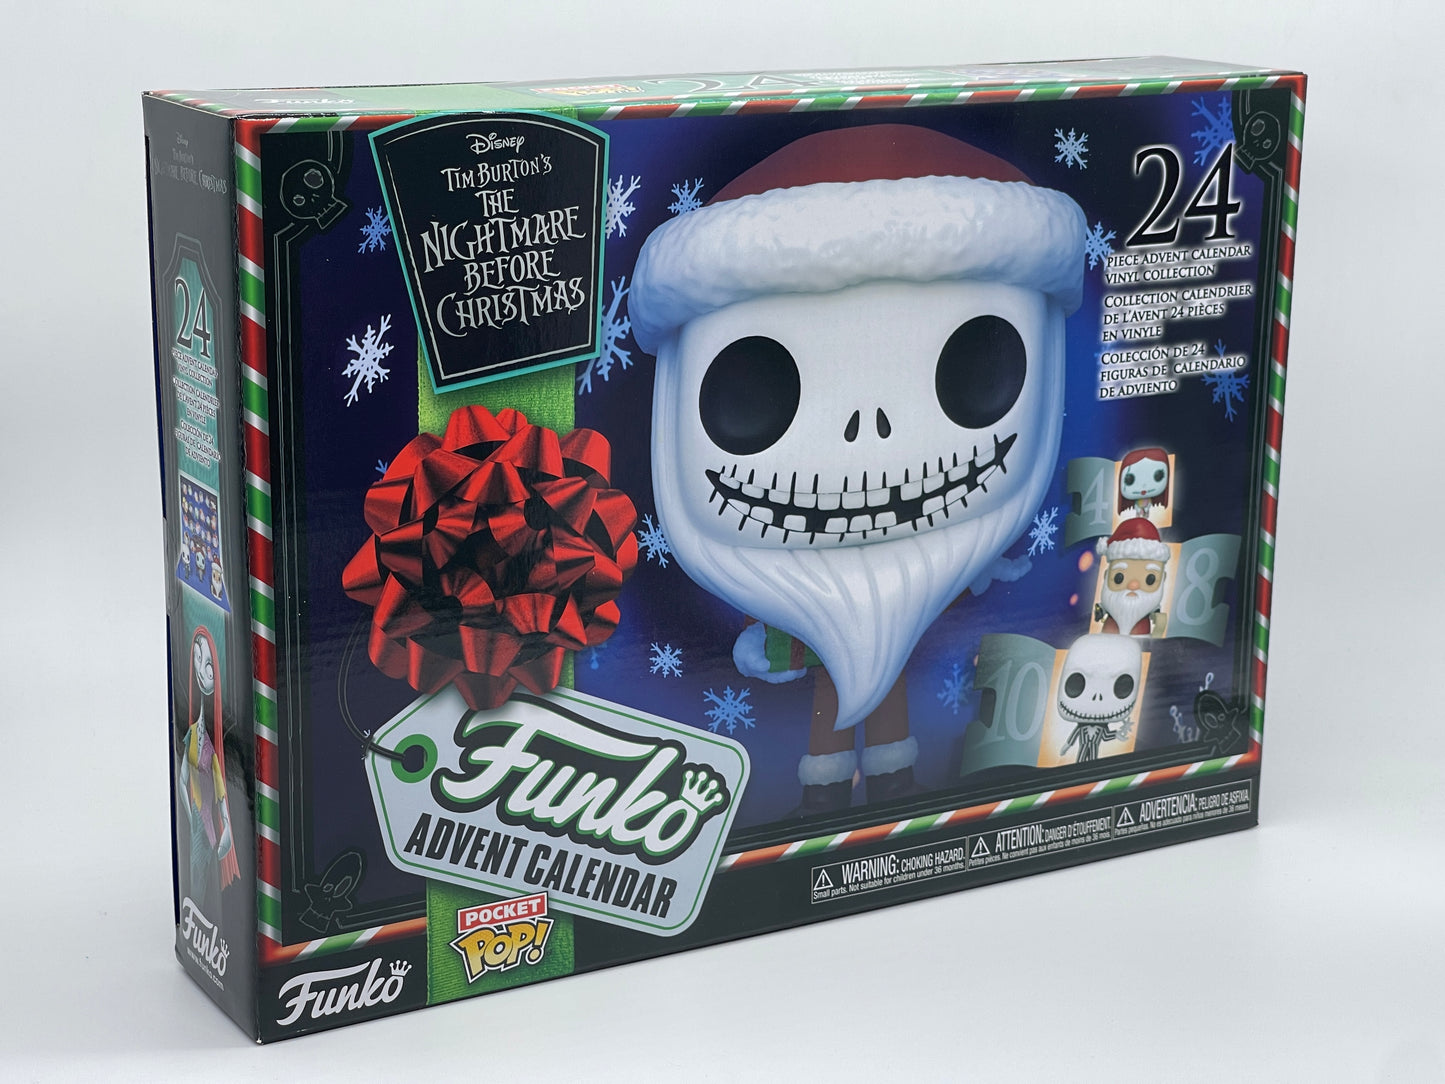 Funko Pocket Pop! Adventskalender "The Nightmare before Christmas" mit 24 Figuren